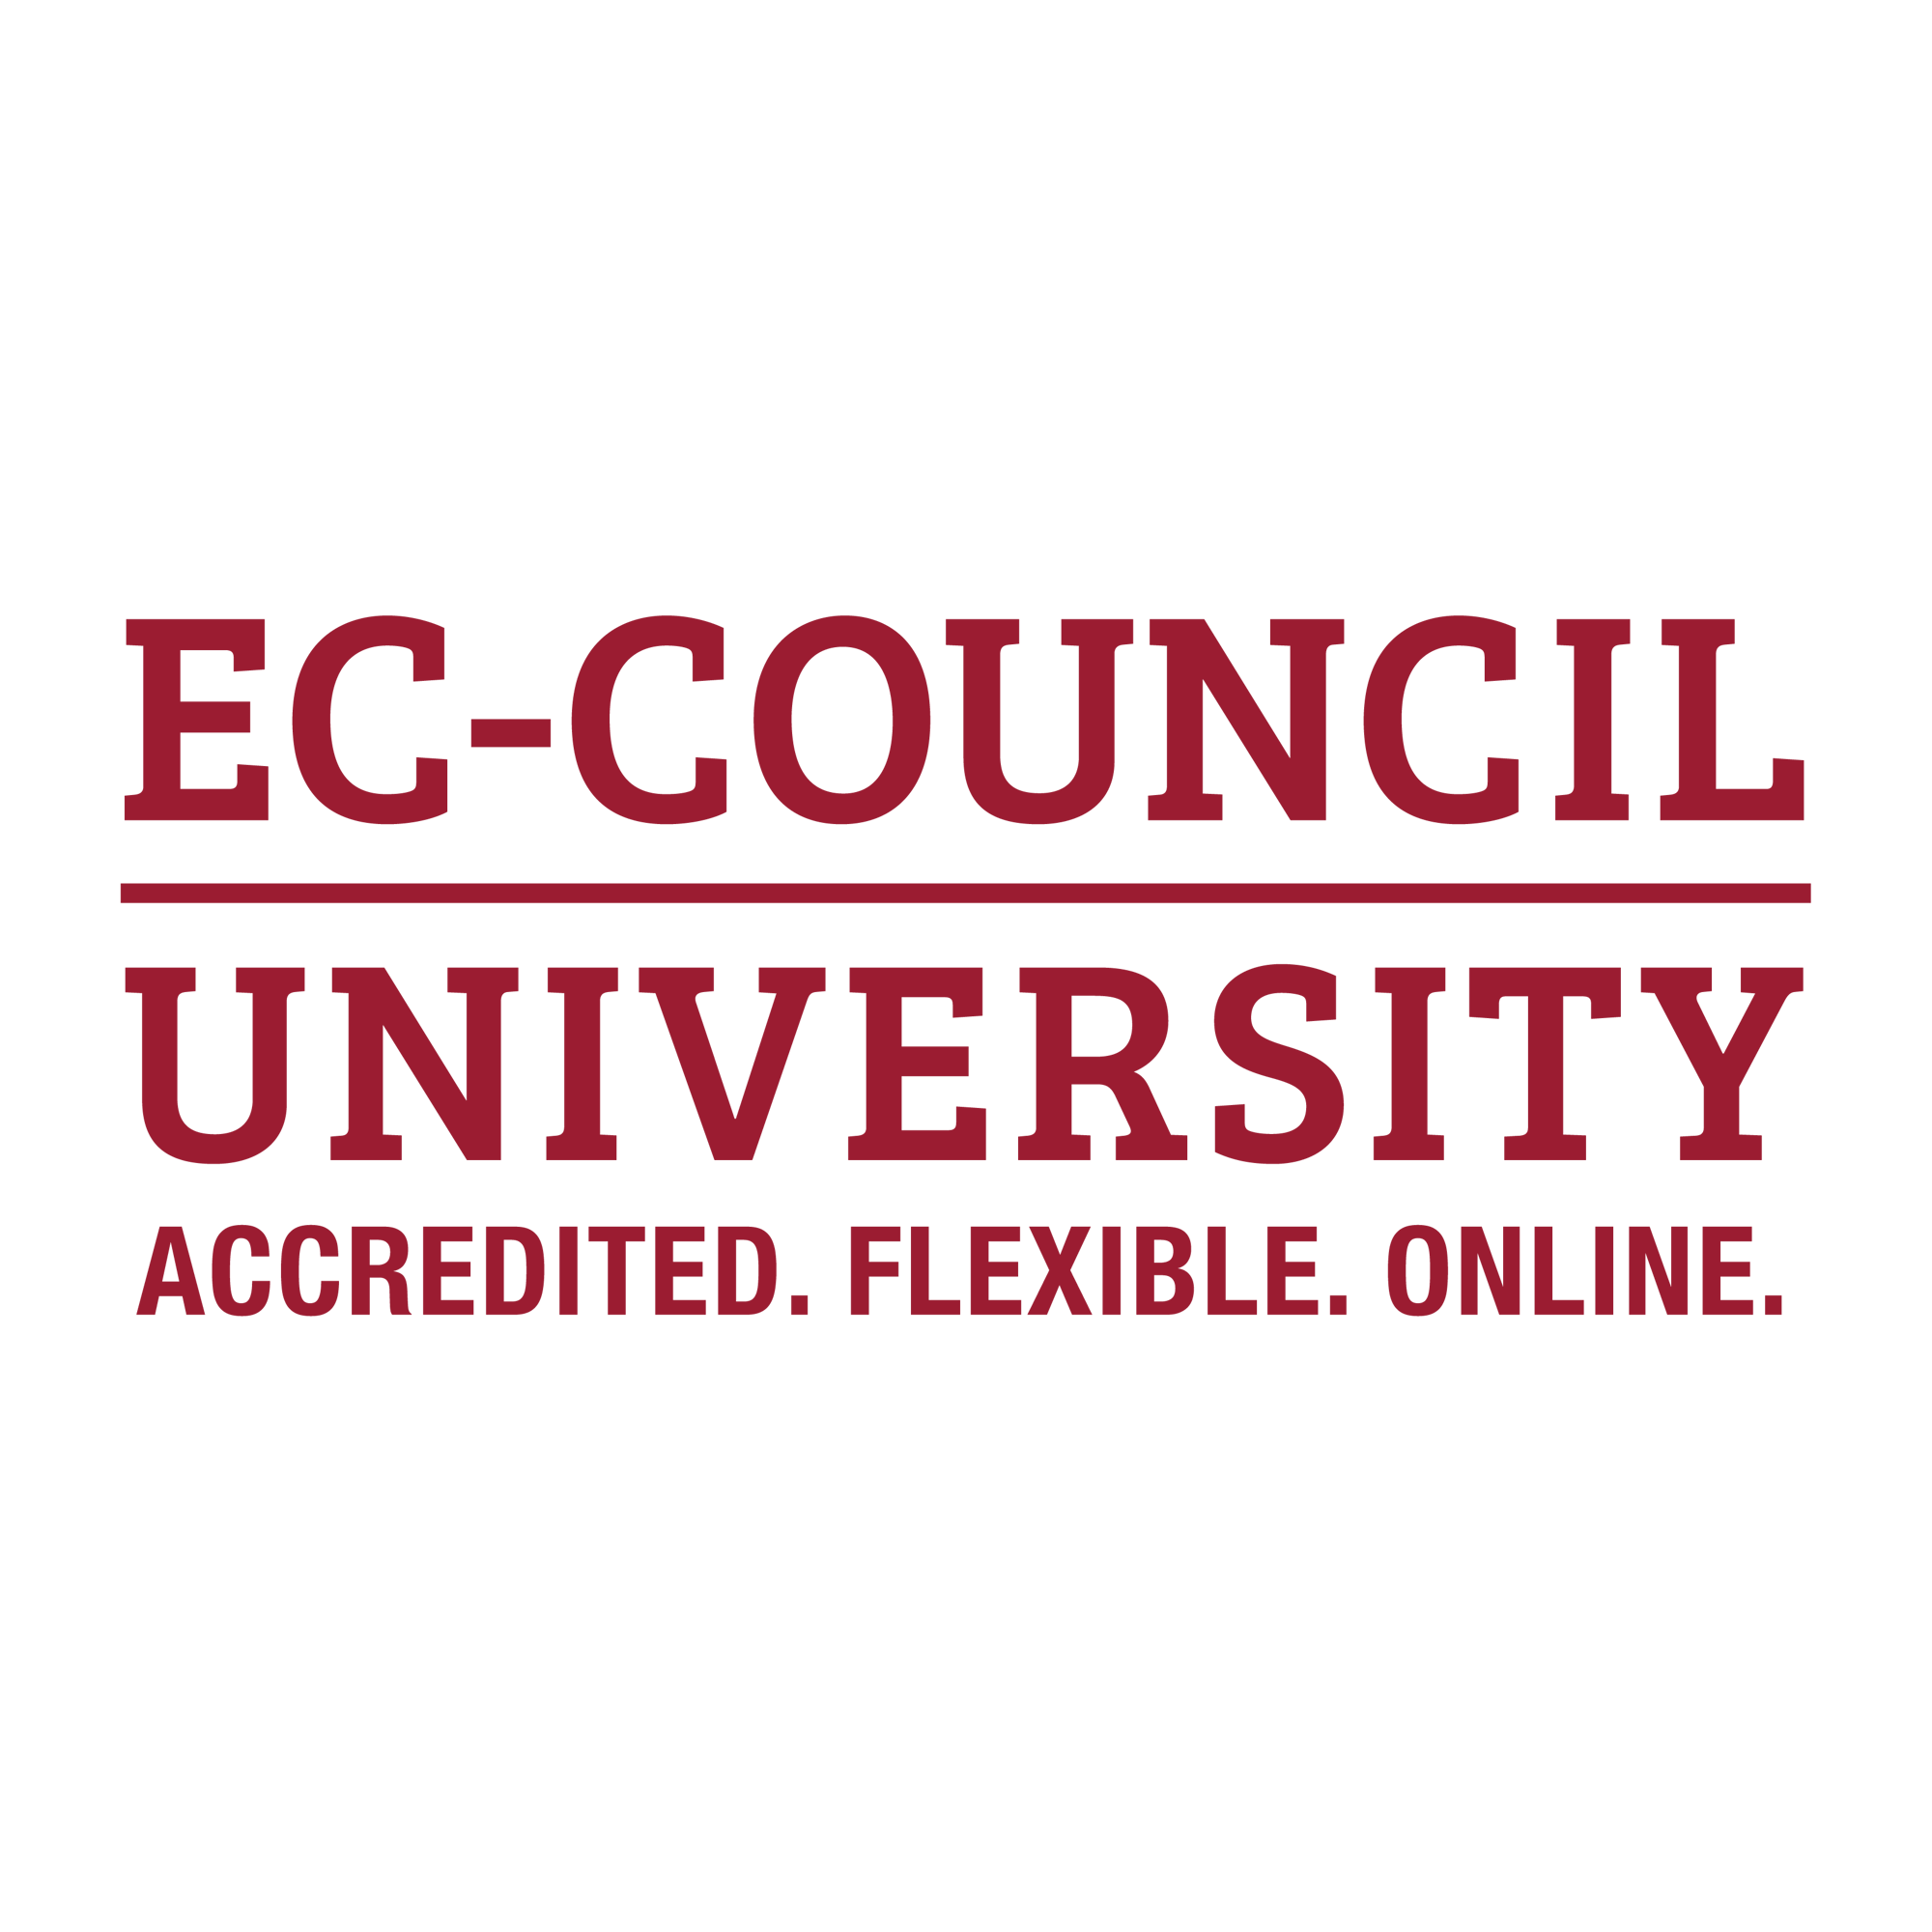 EC-Council University